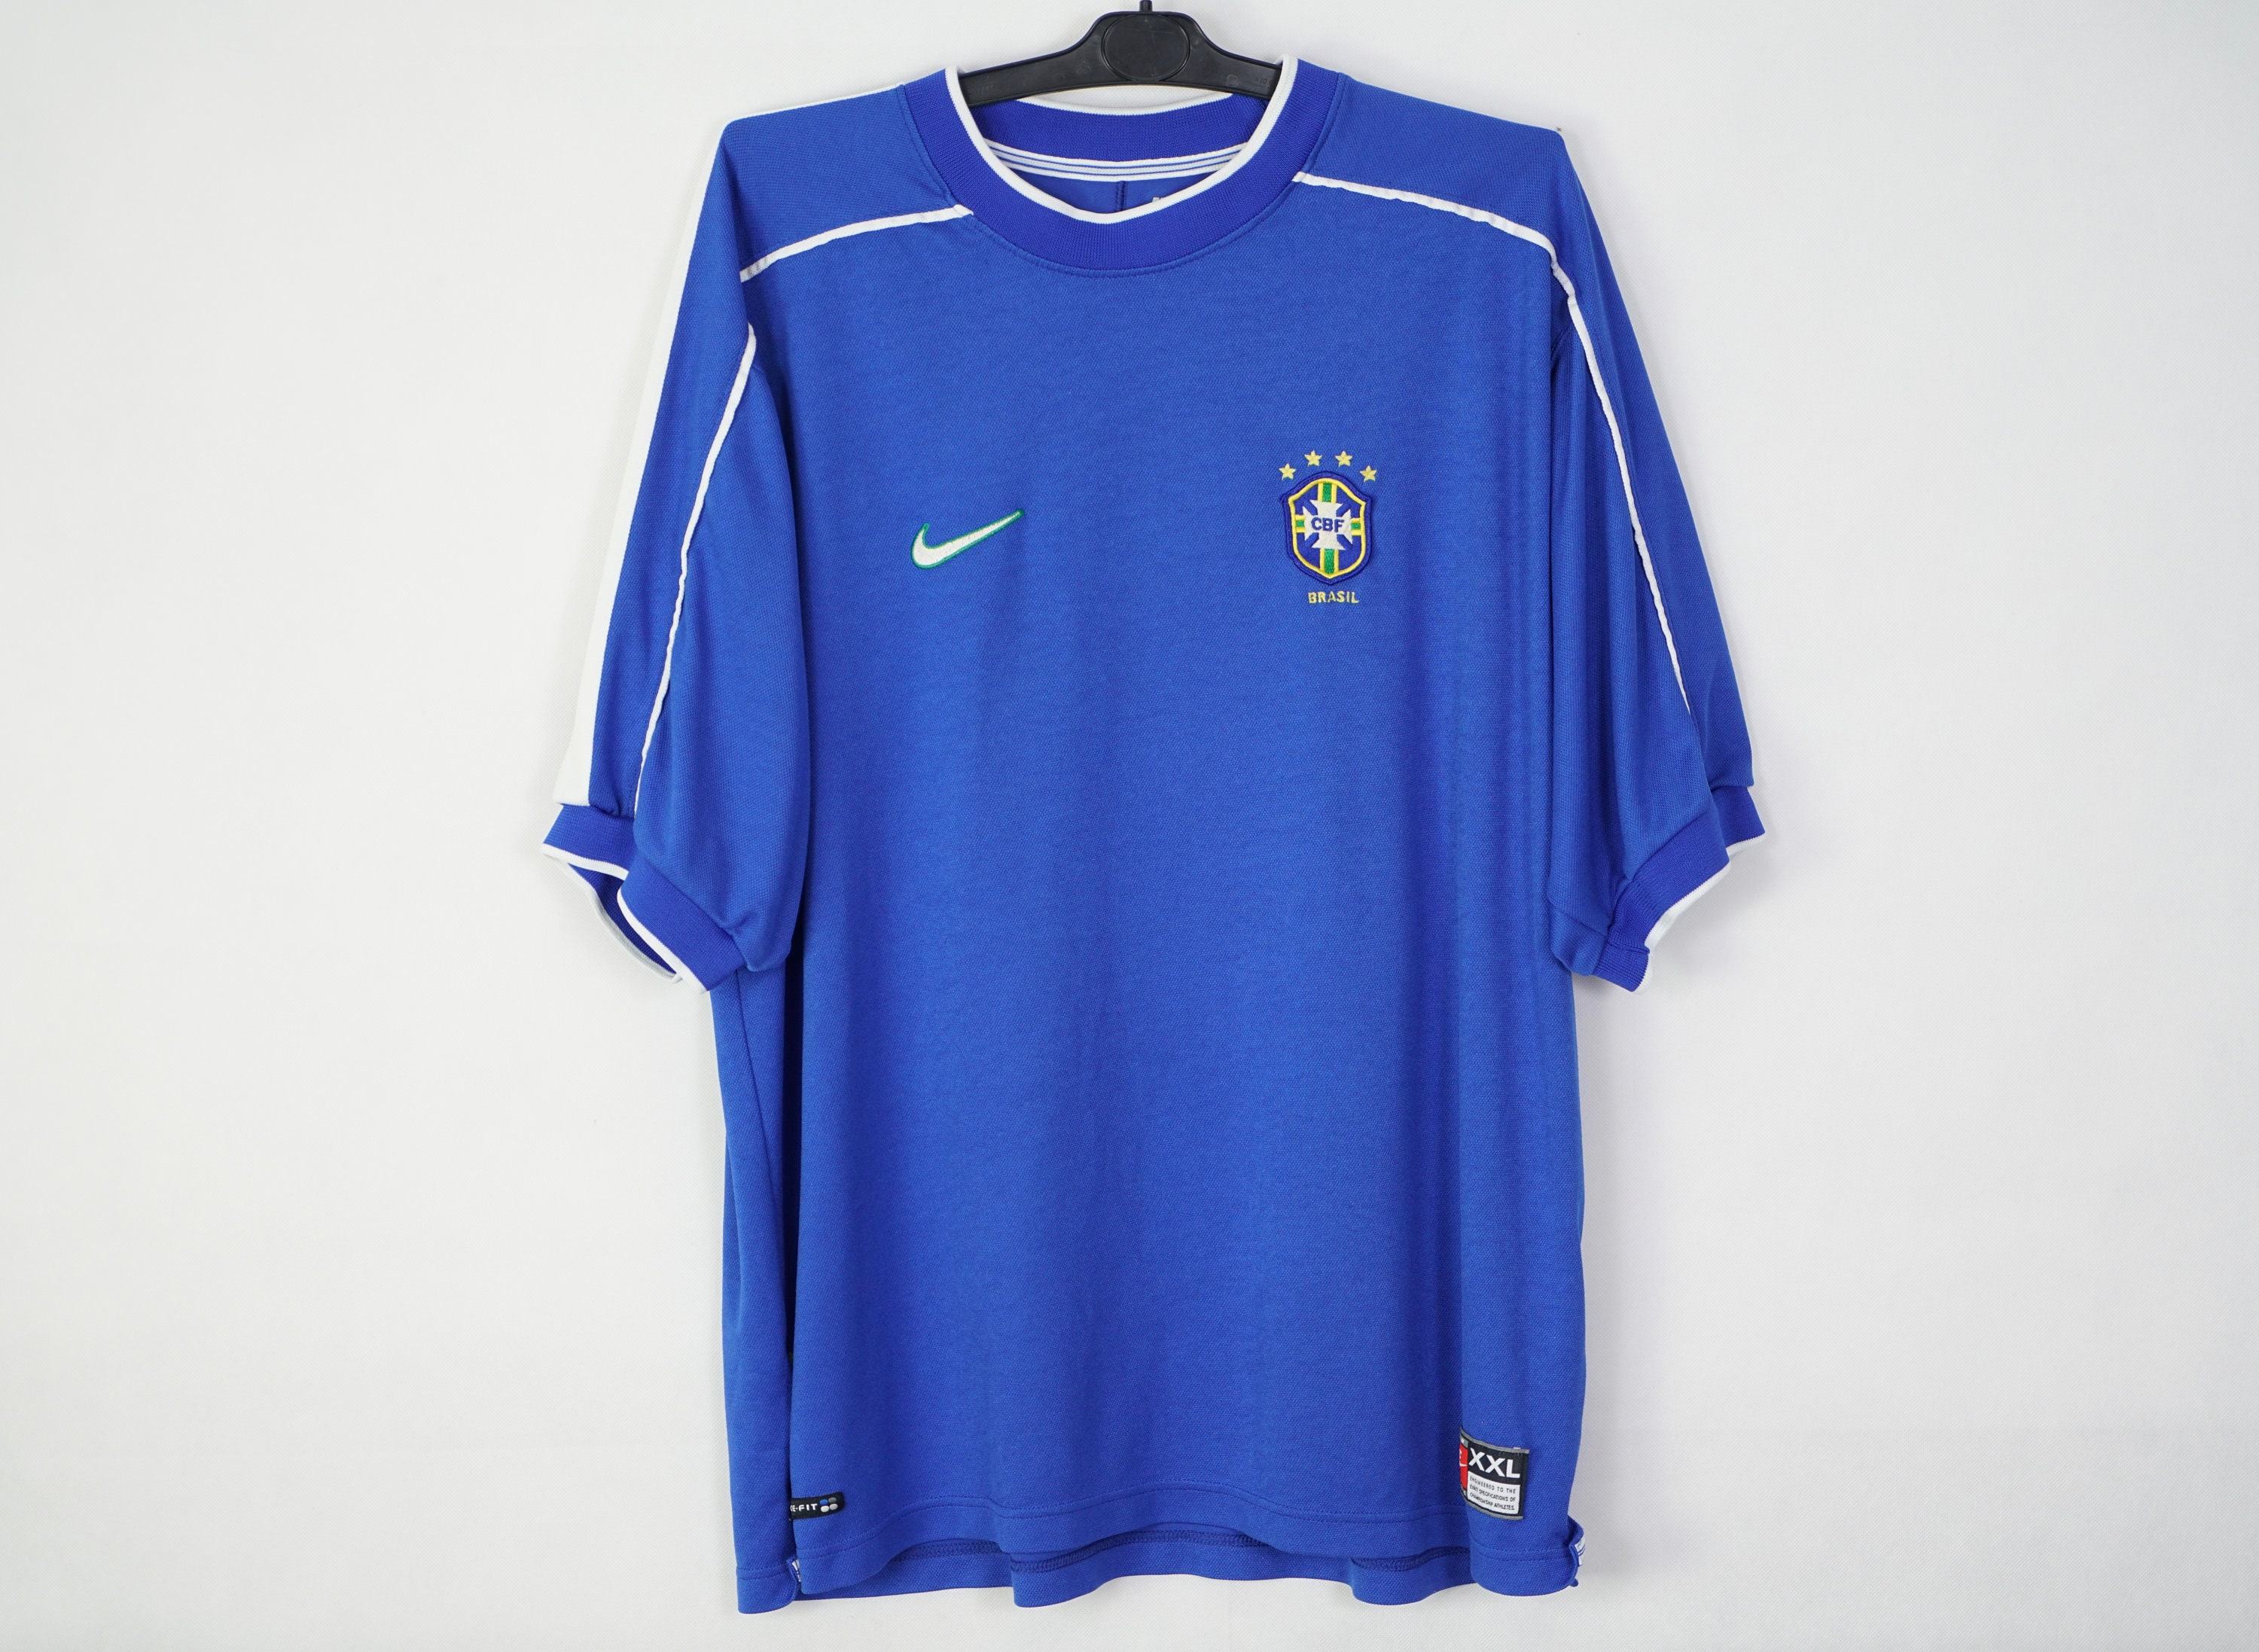 Brazil Nike Jersey -  Canada